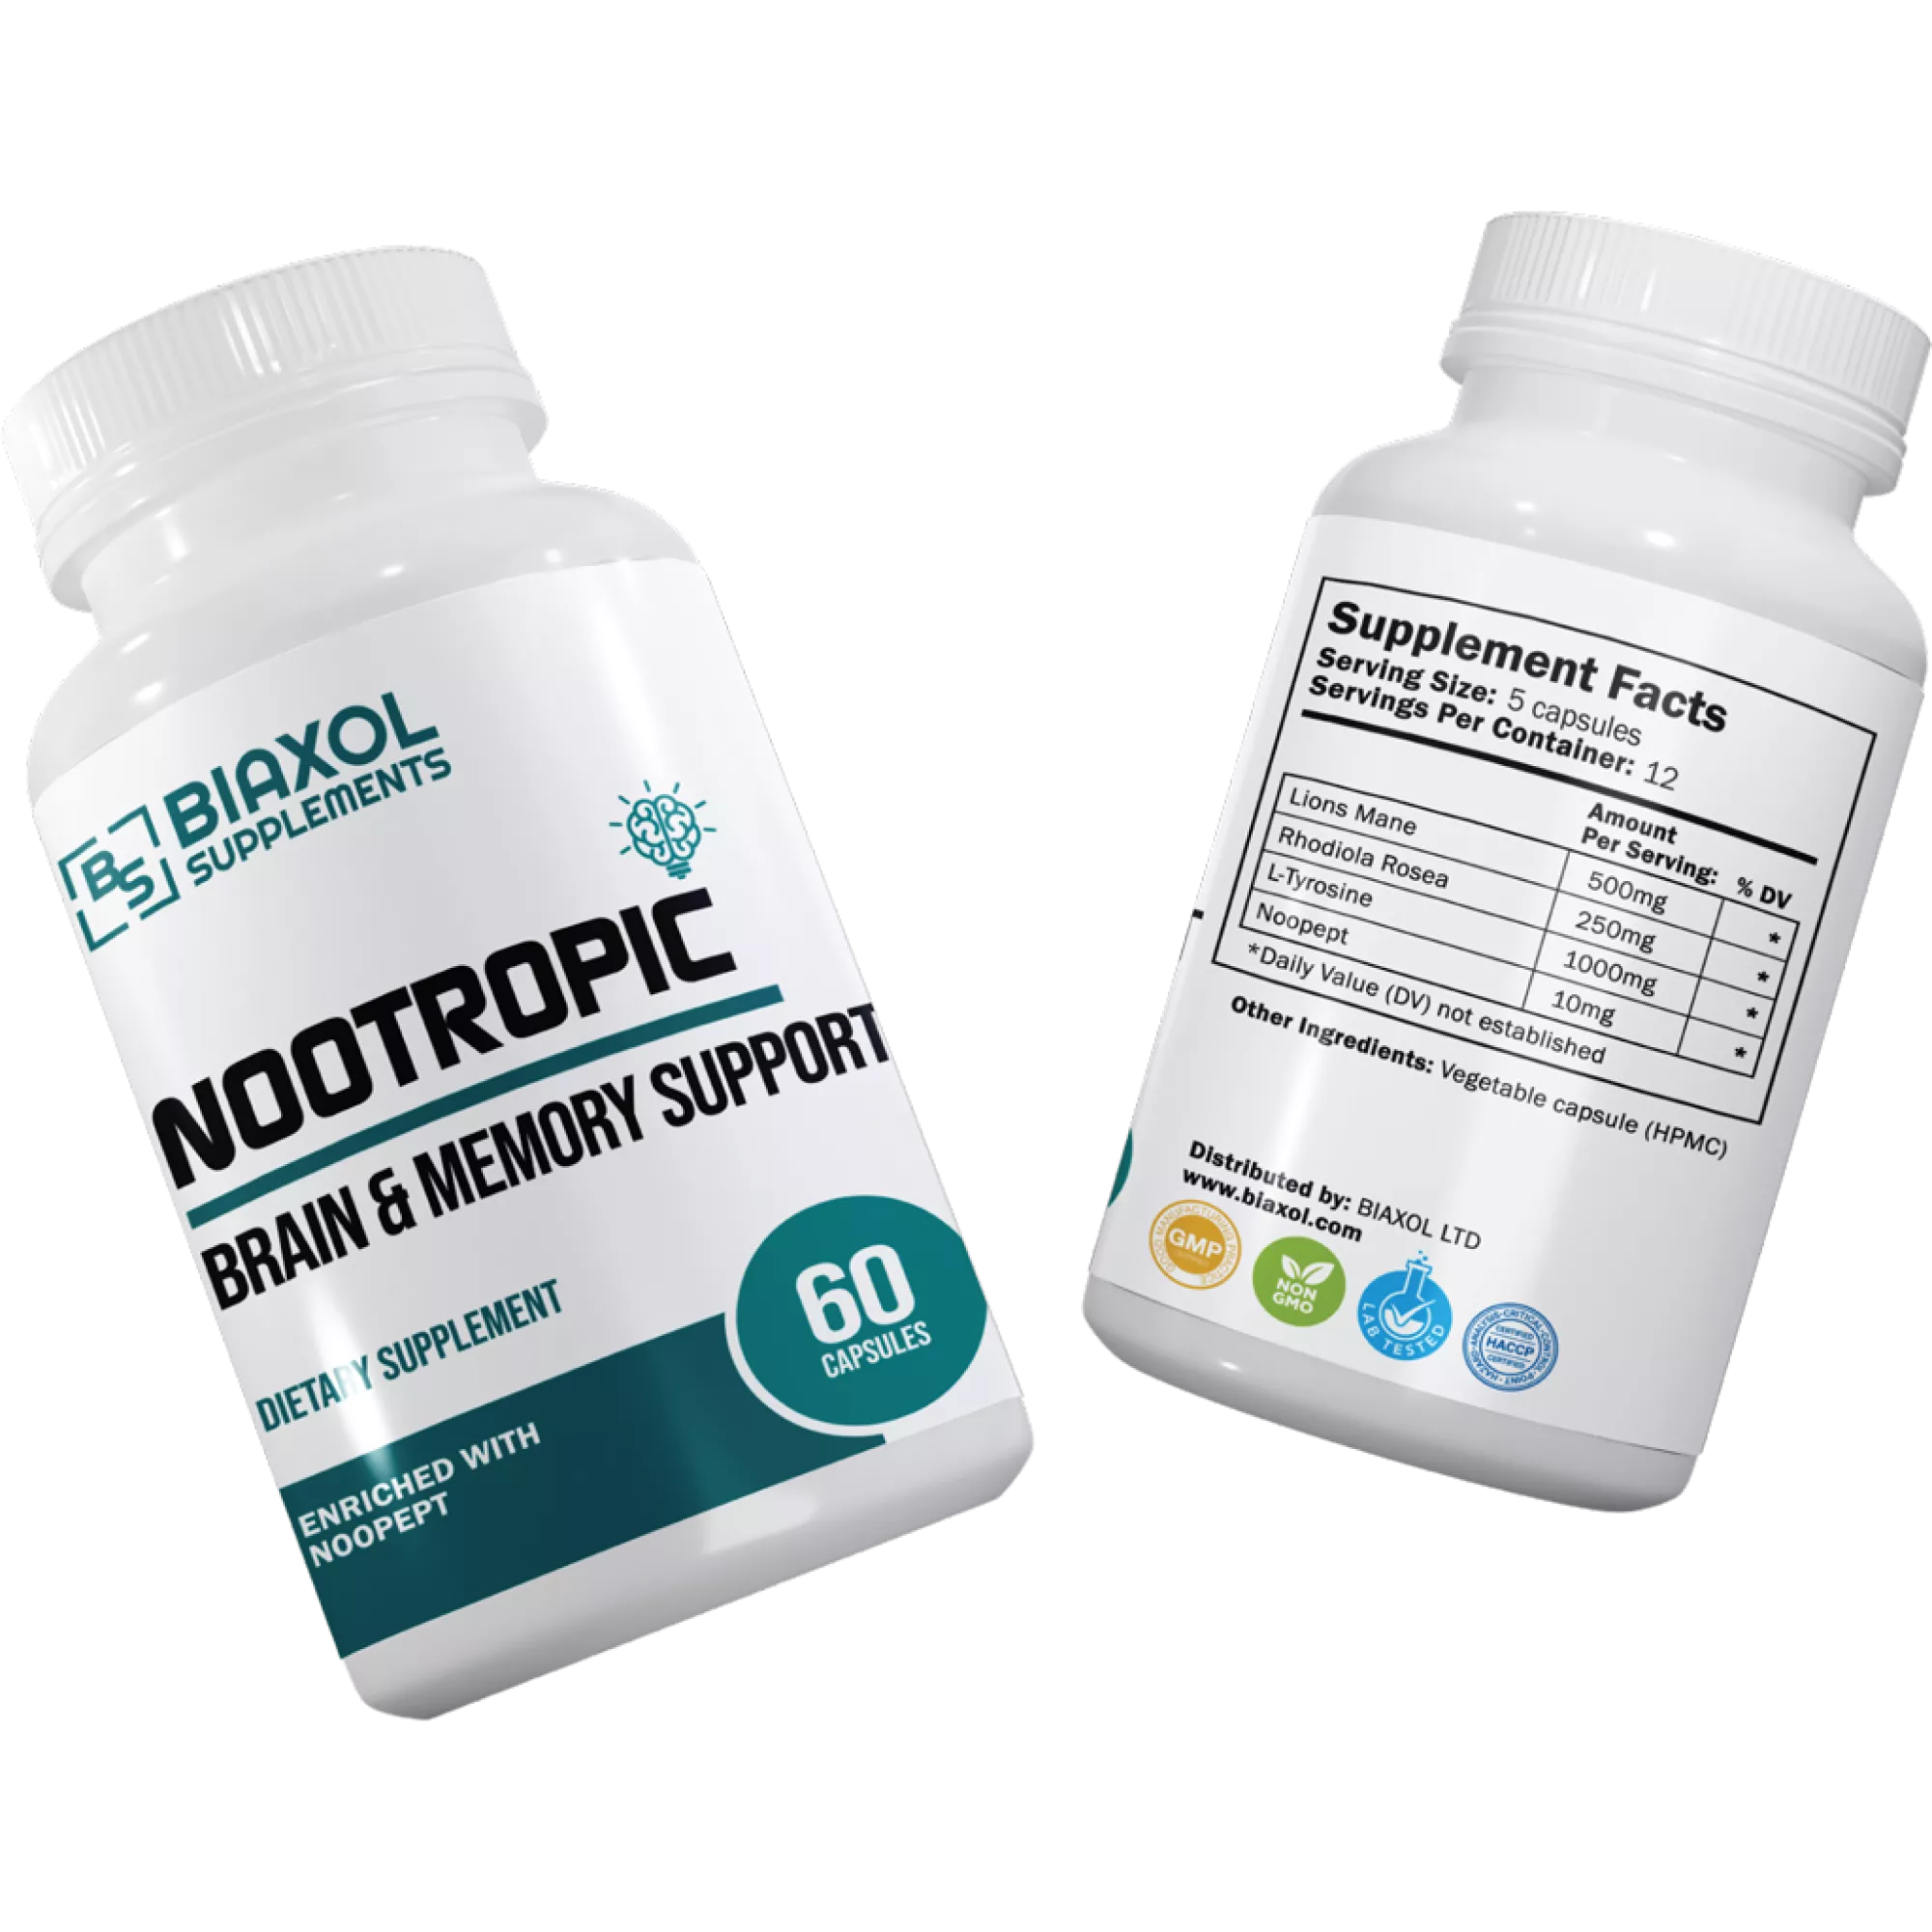 NOOTROPIC (Brain & Memory Support), Biaxol, Buy Steroids Online - www.deuspower.shop